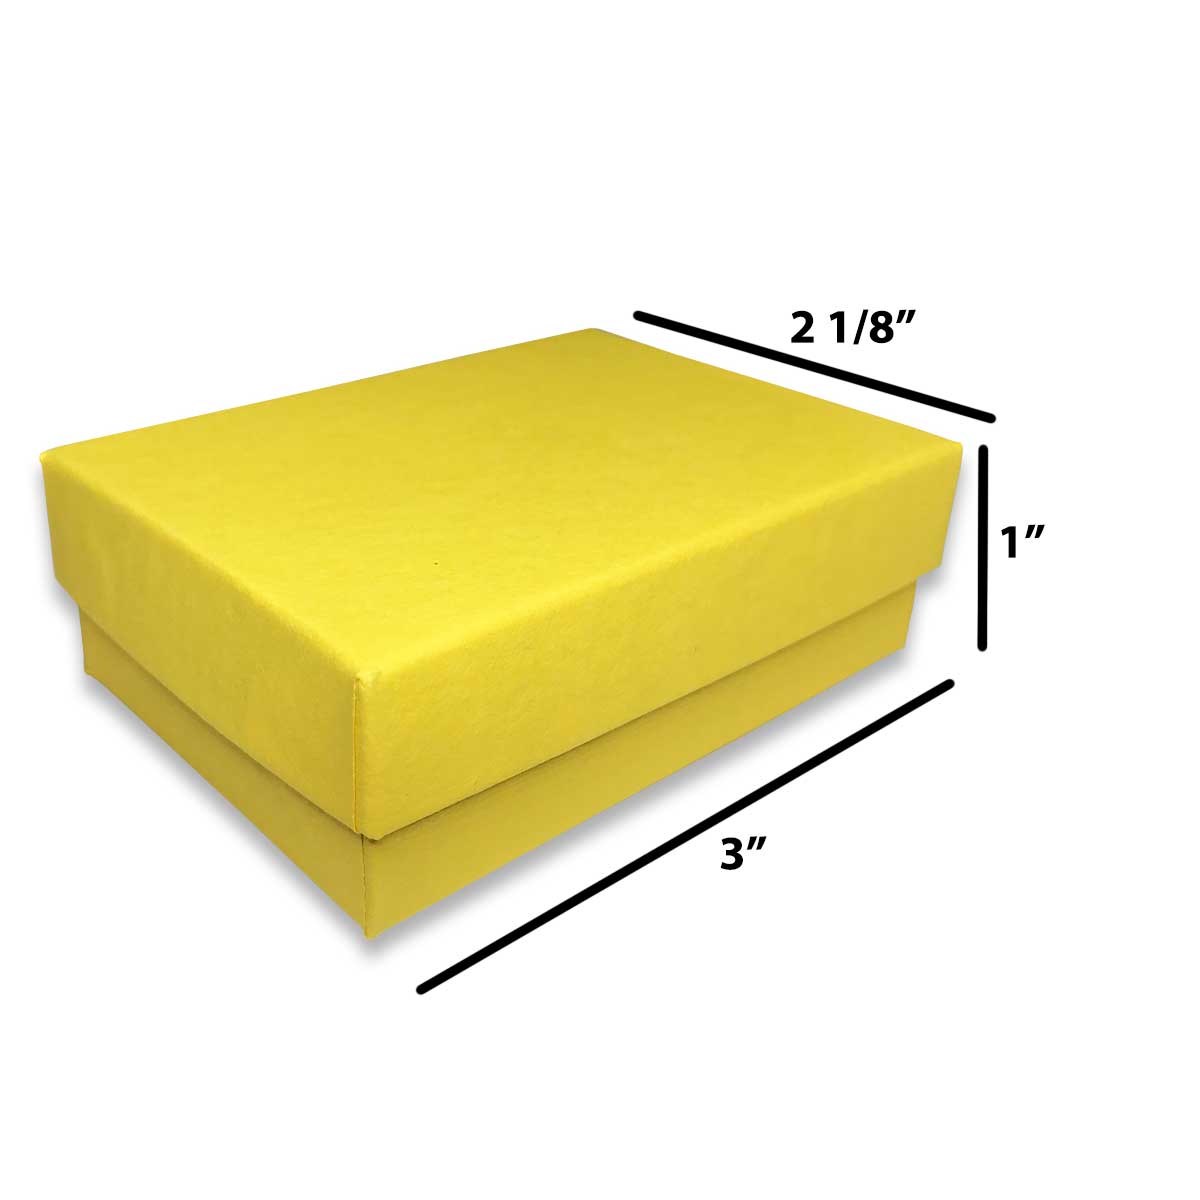 Yellow Kraft Cotton Filled Box 3" x 2 1/8" x 1"H